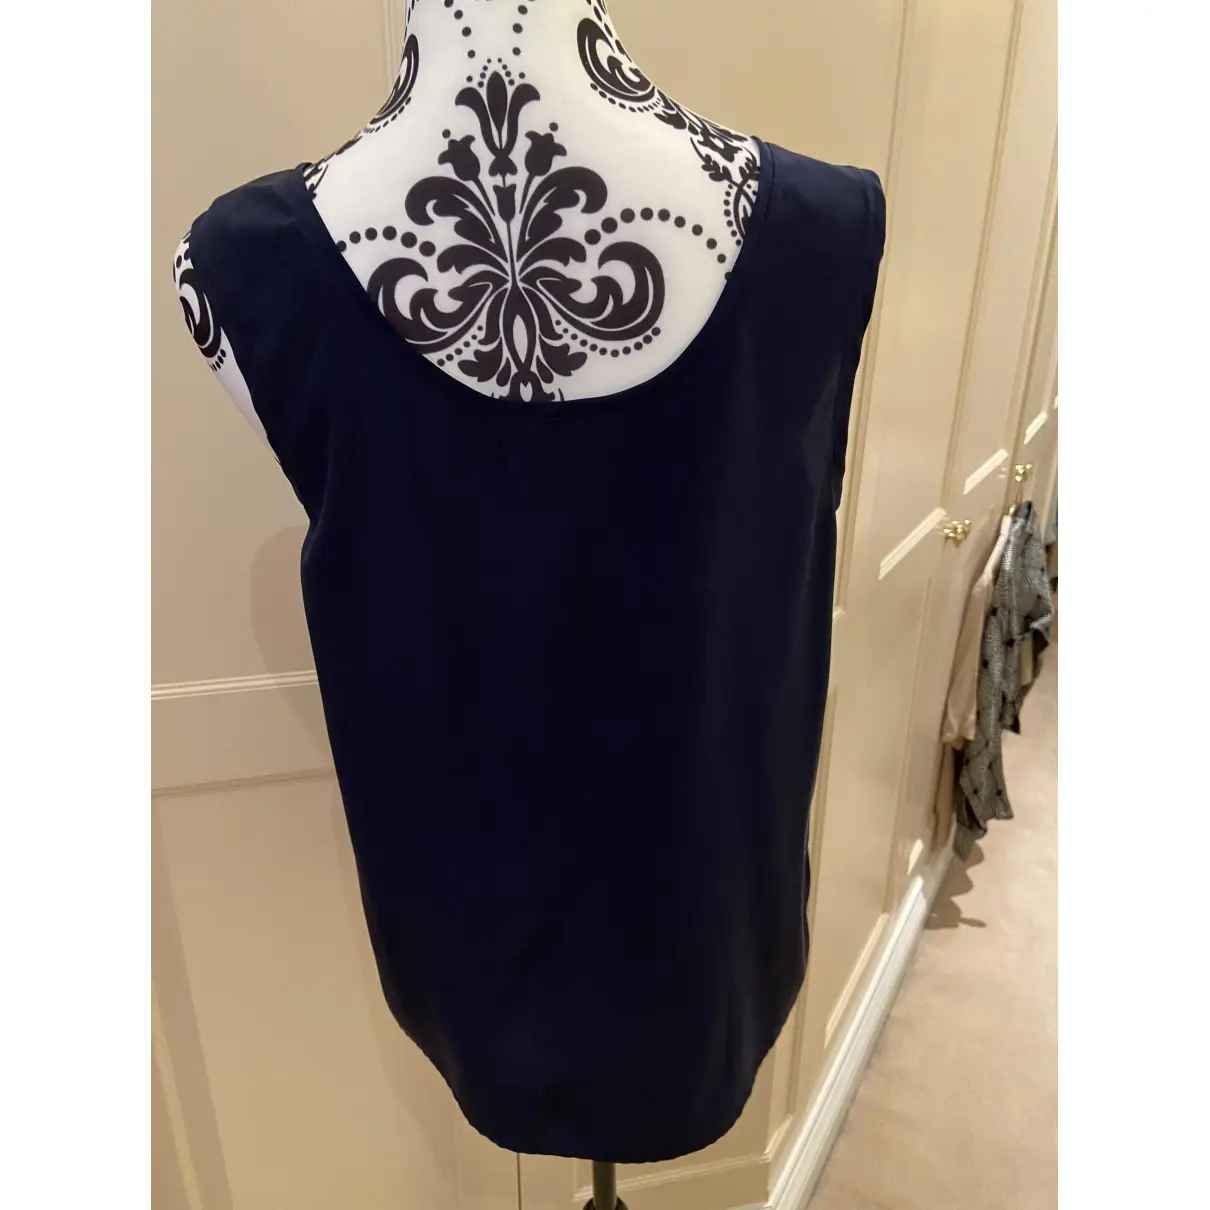 Buy Yves Saint Laurent Silk camisole online - Vintage